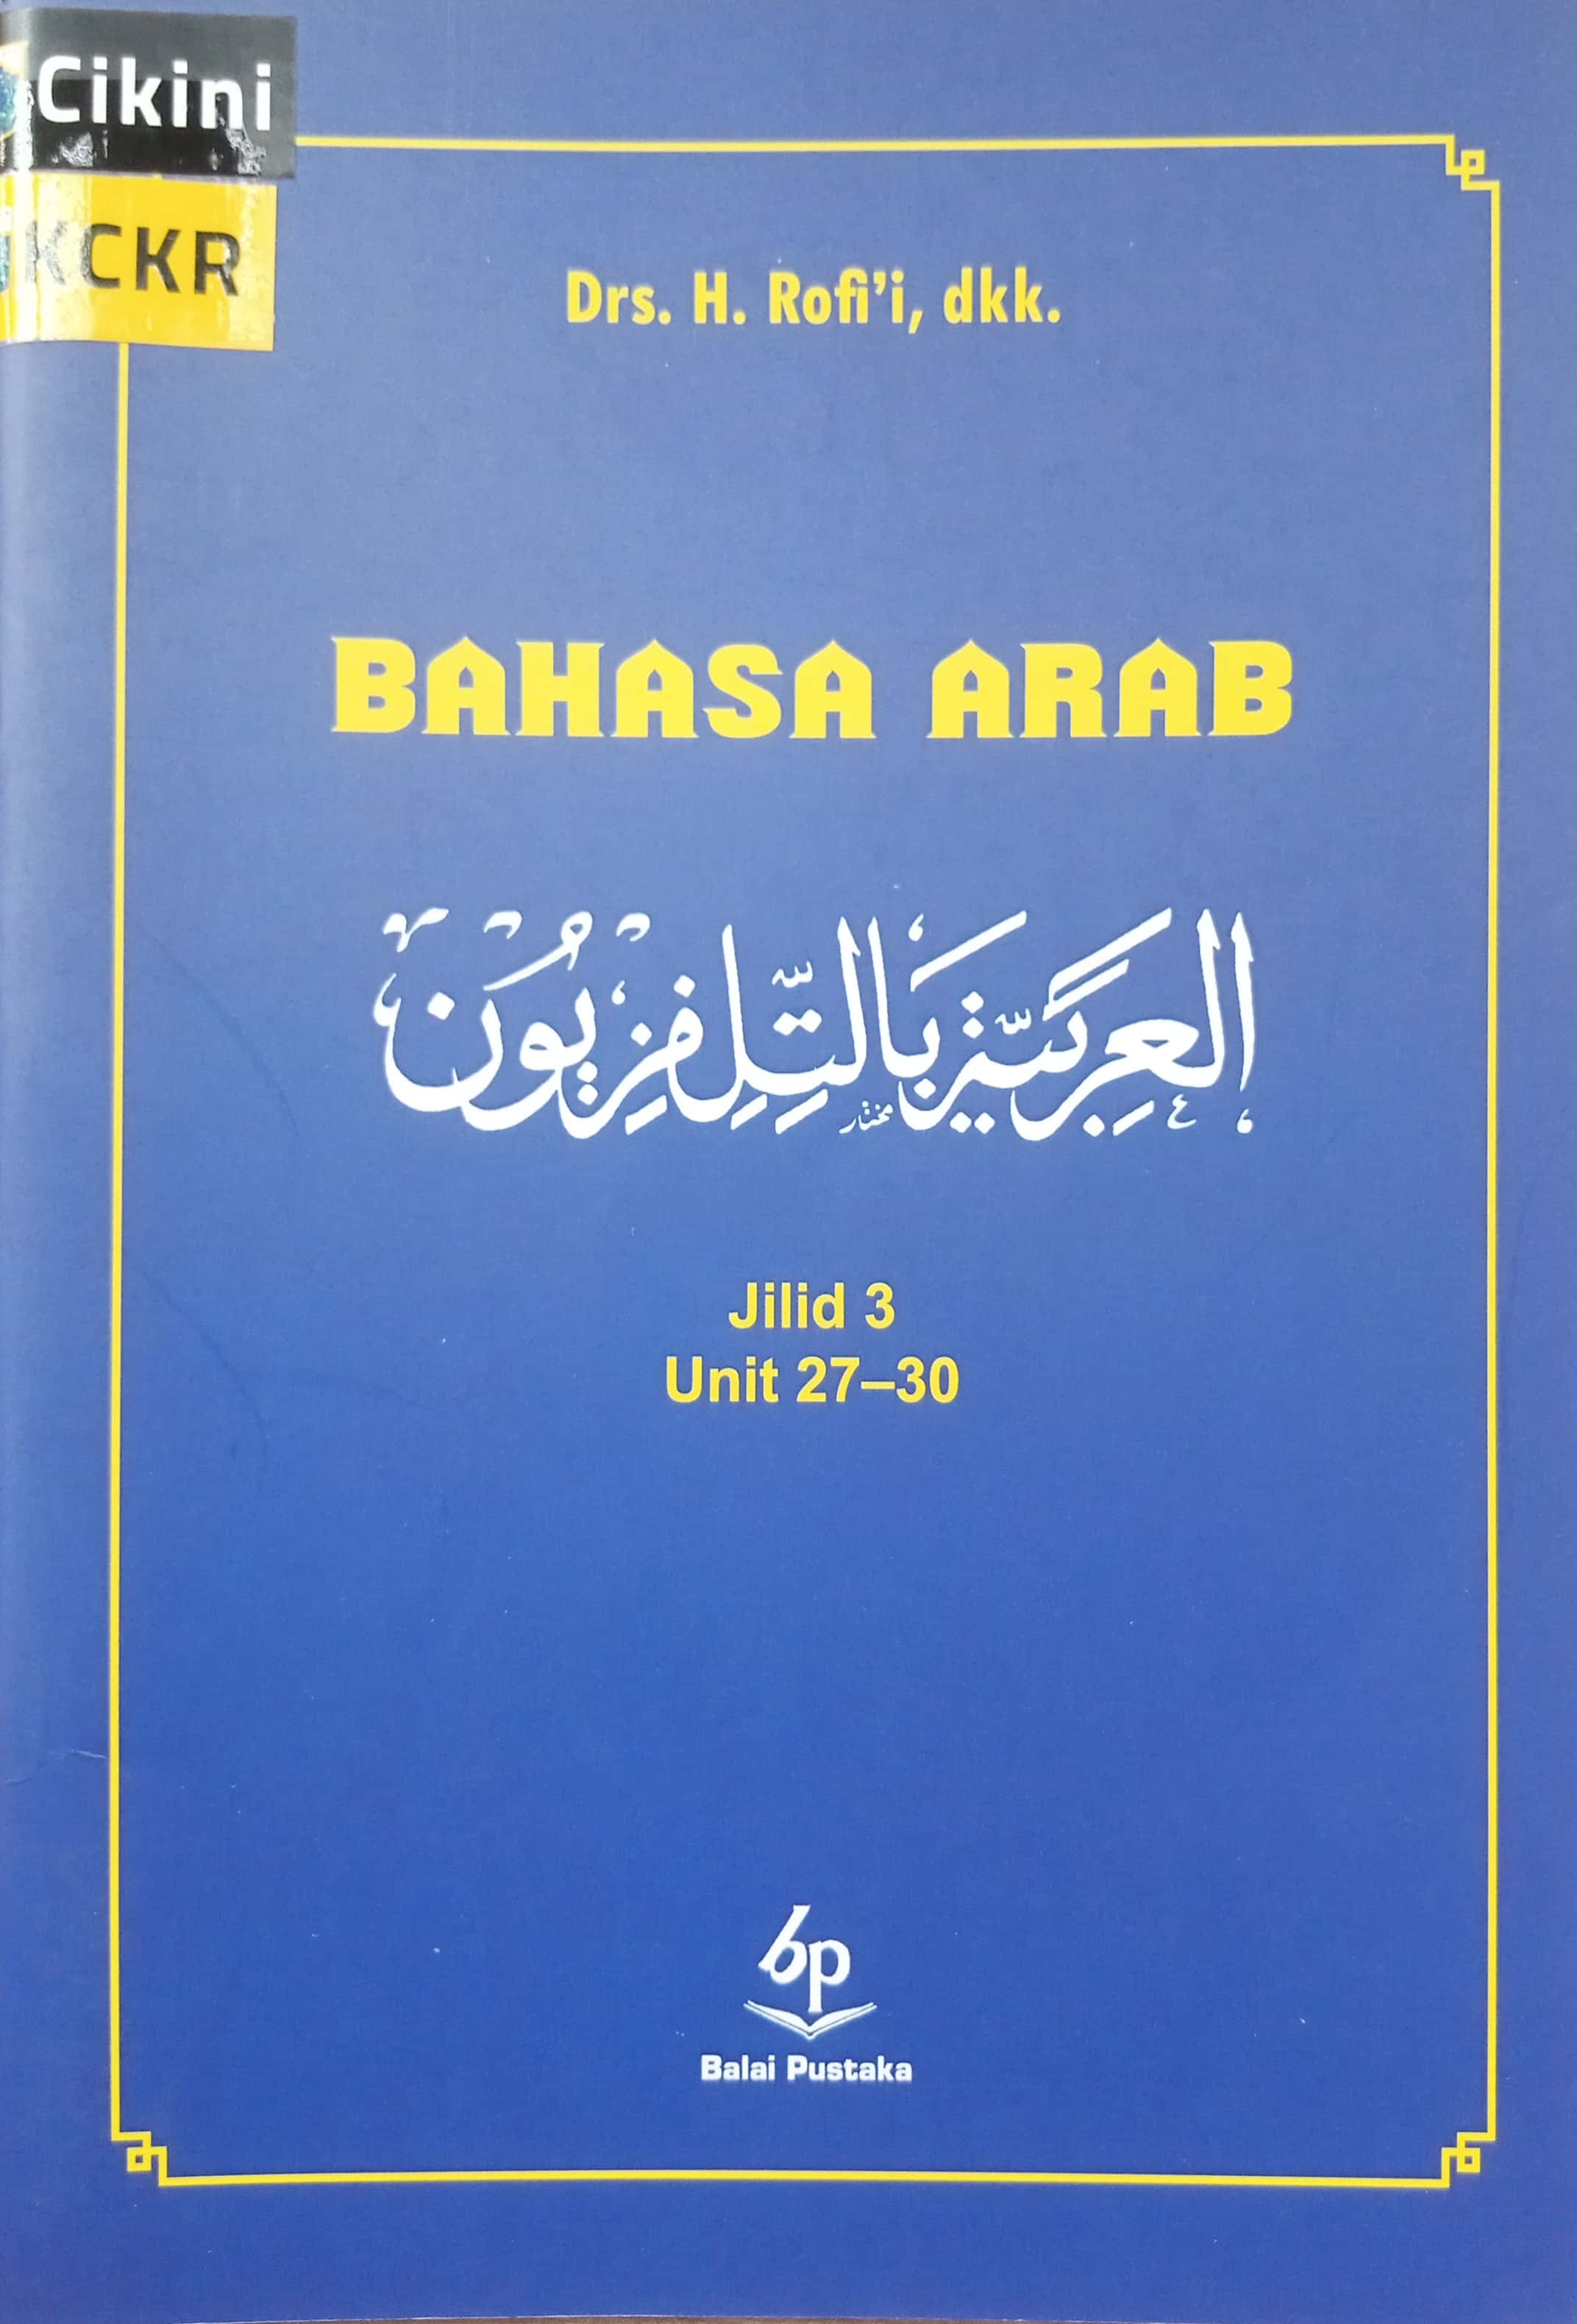 Bahasa Arab jilid 3 unit 27-30